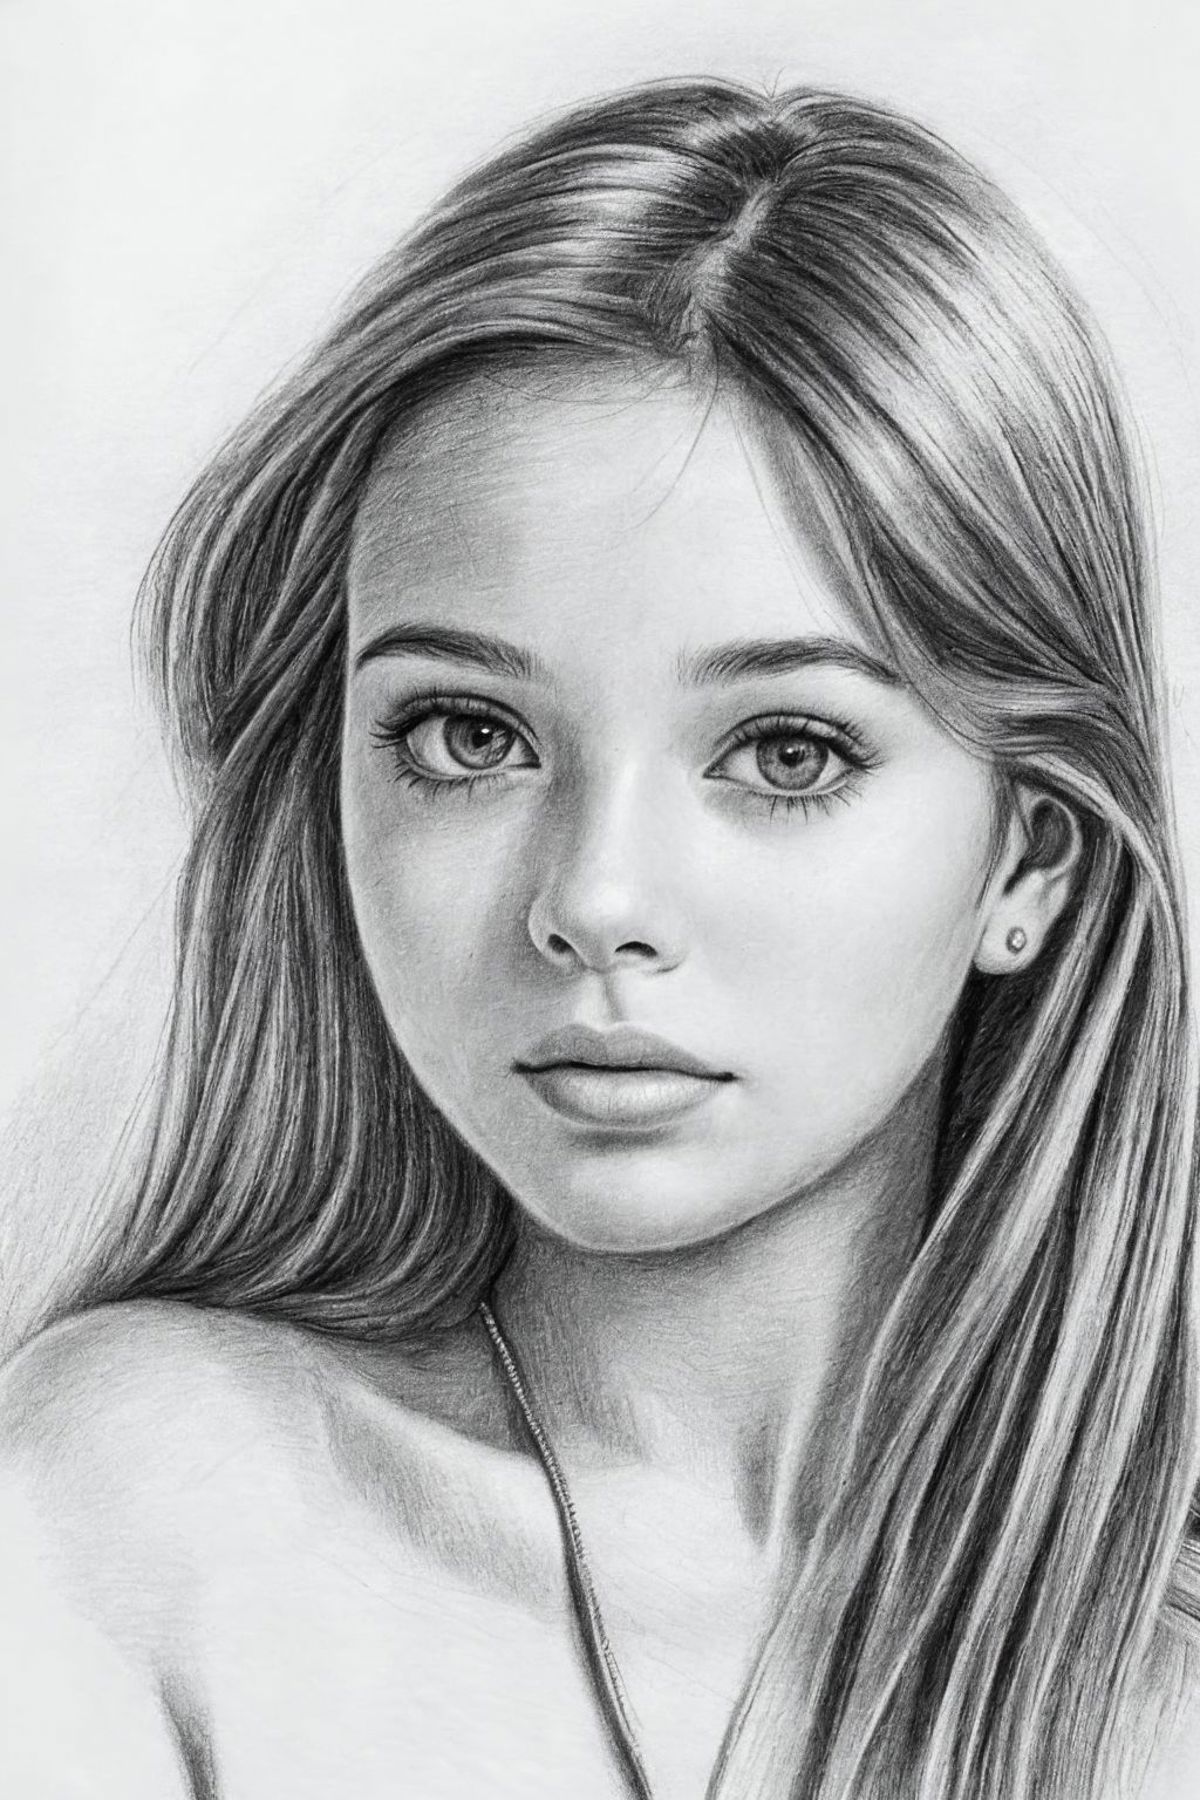 A beautiful young woman with long blonde hair wearing earrings.